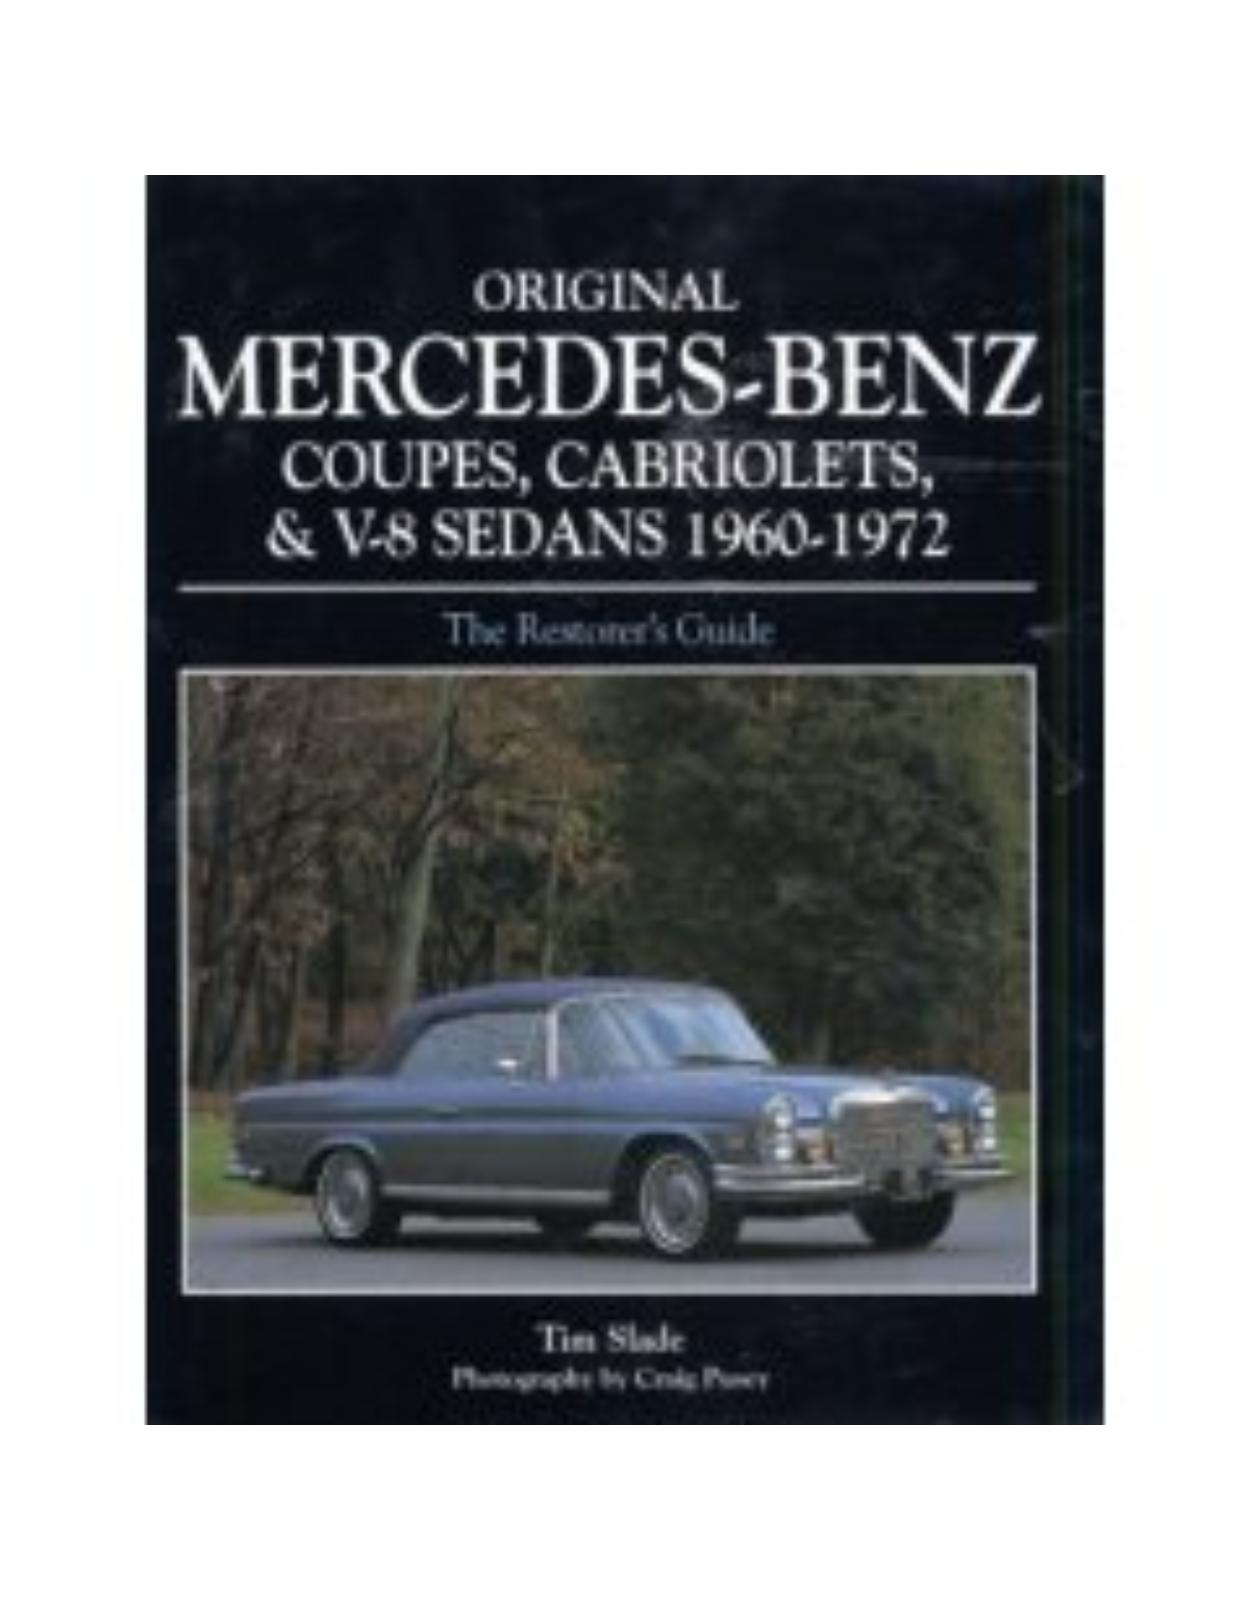 Original Mercedes-Benz Coupes, Cabriolets & V-8 Sedans 1960-1972